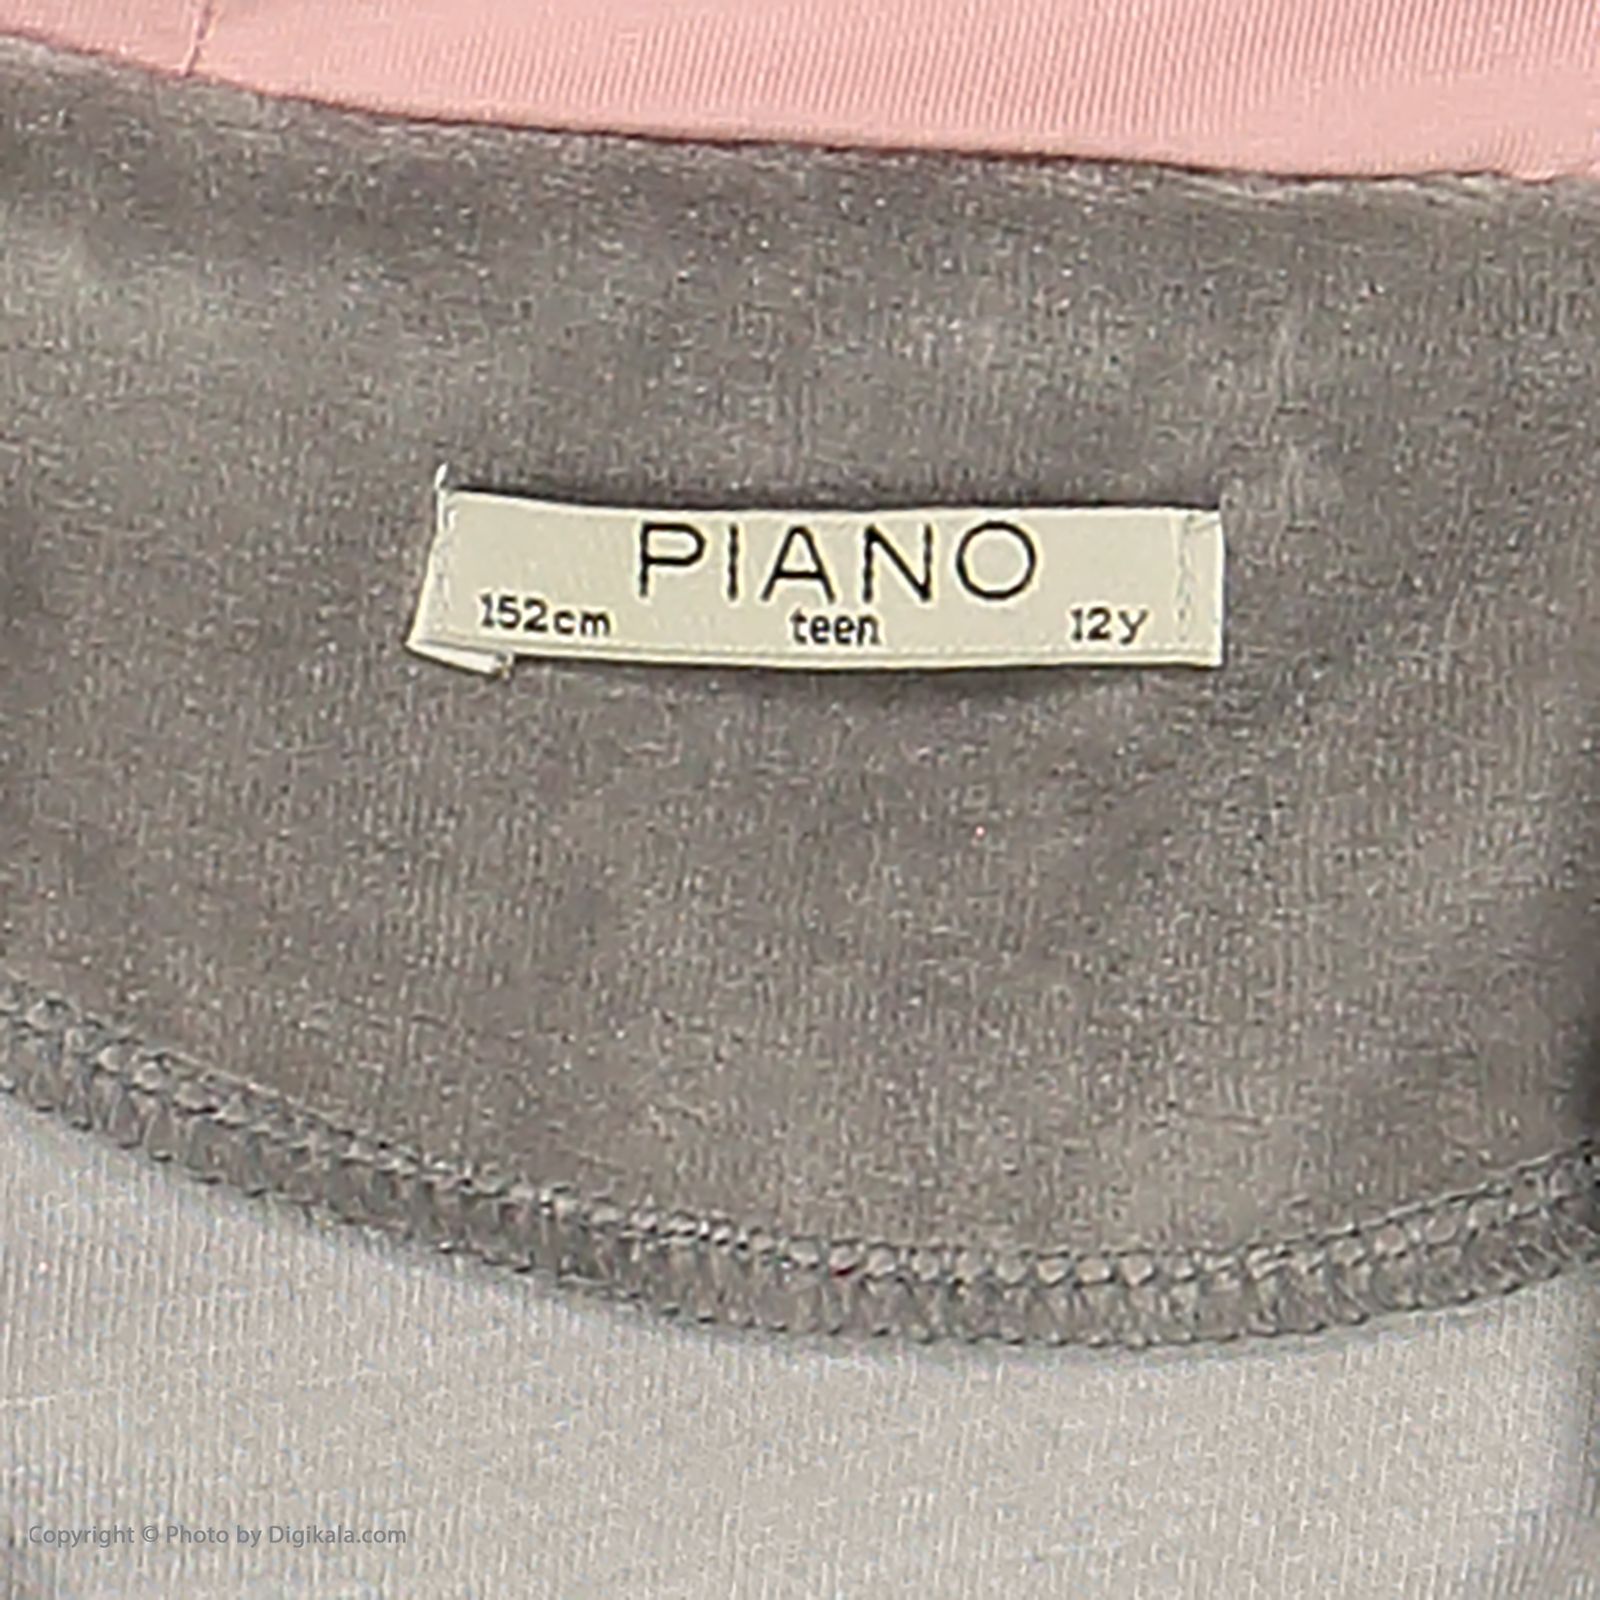 سویشرت دخترانه پیانو مدل 01679-93 -  - 5